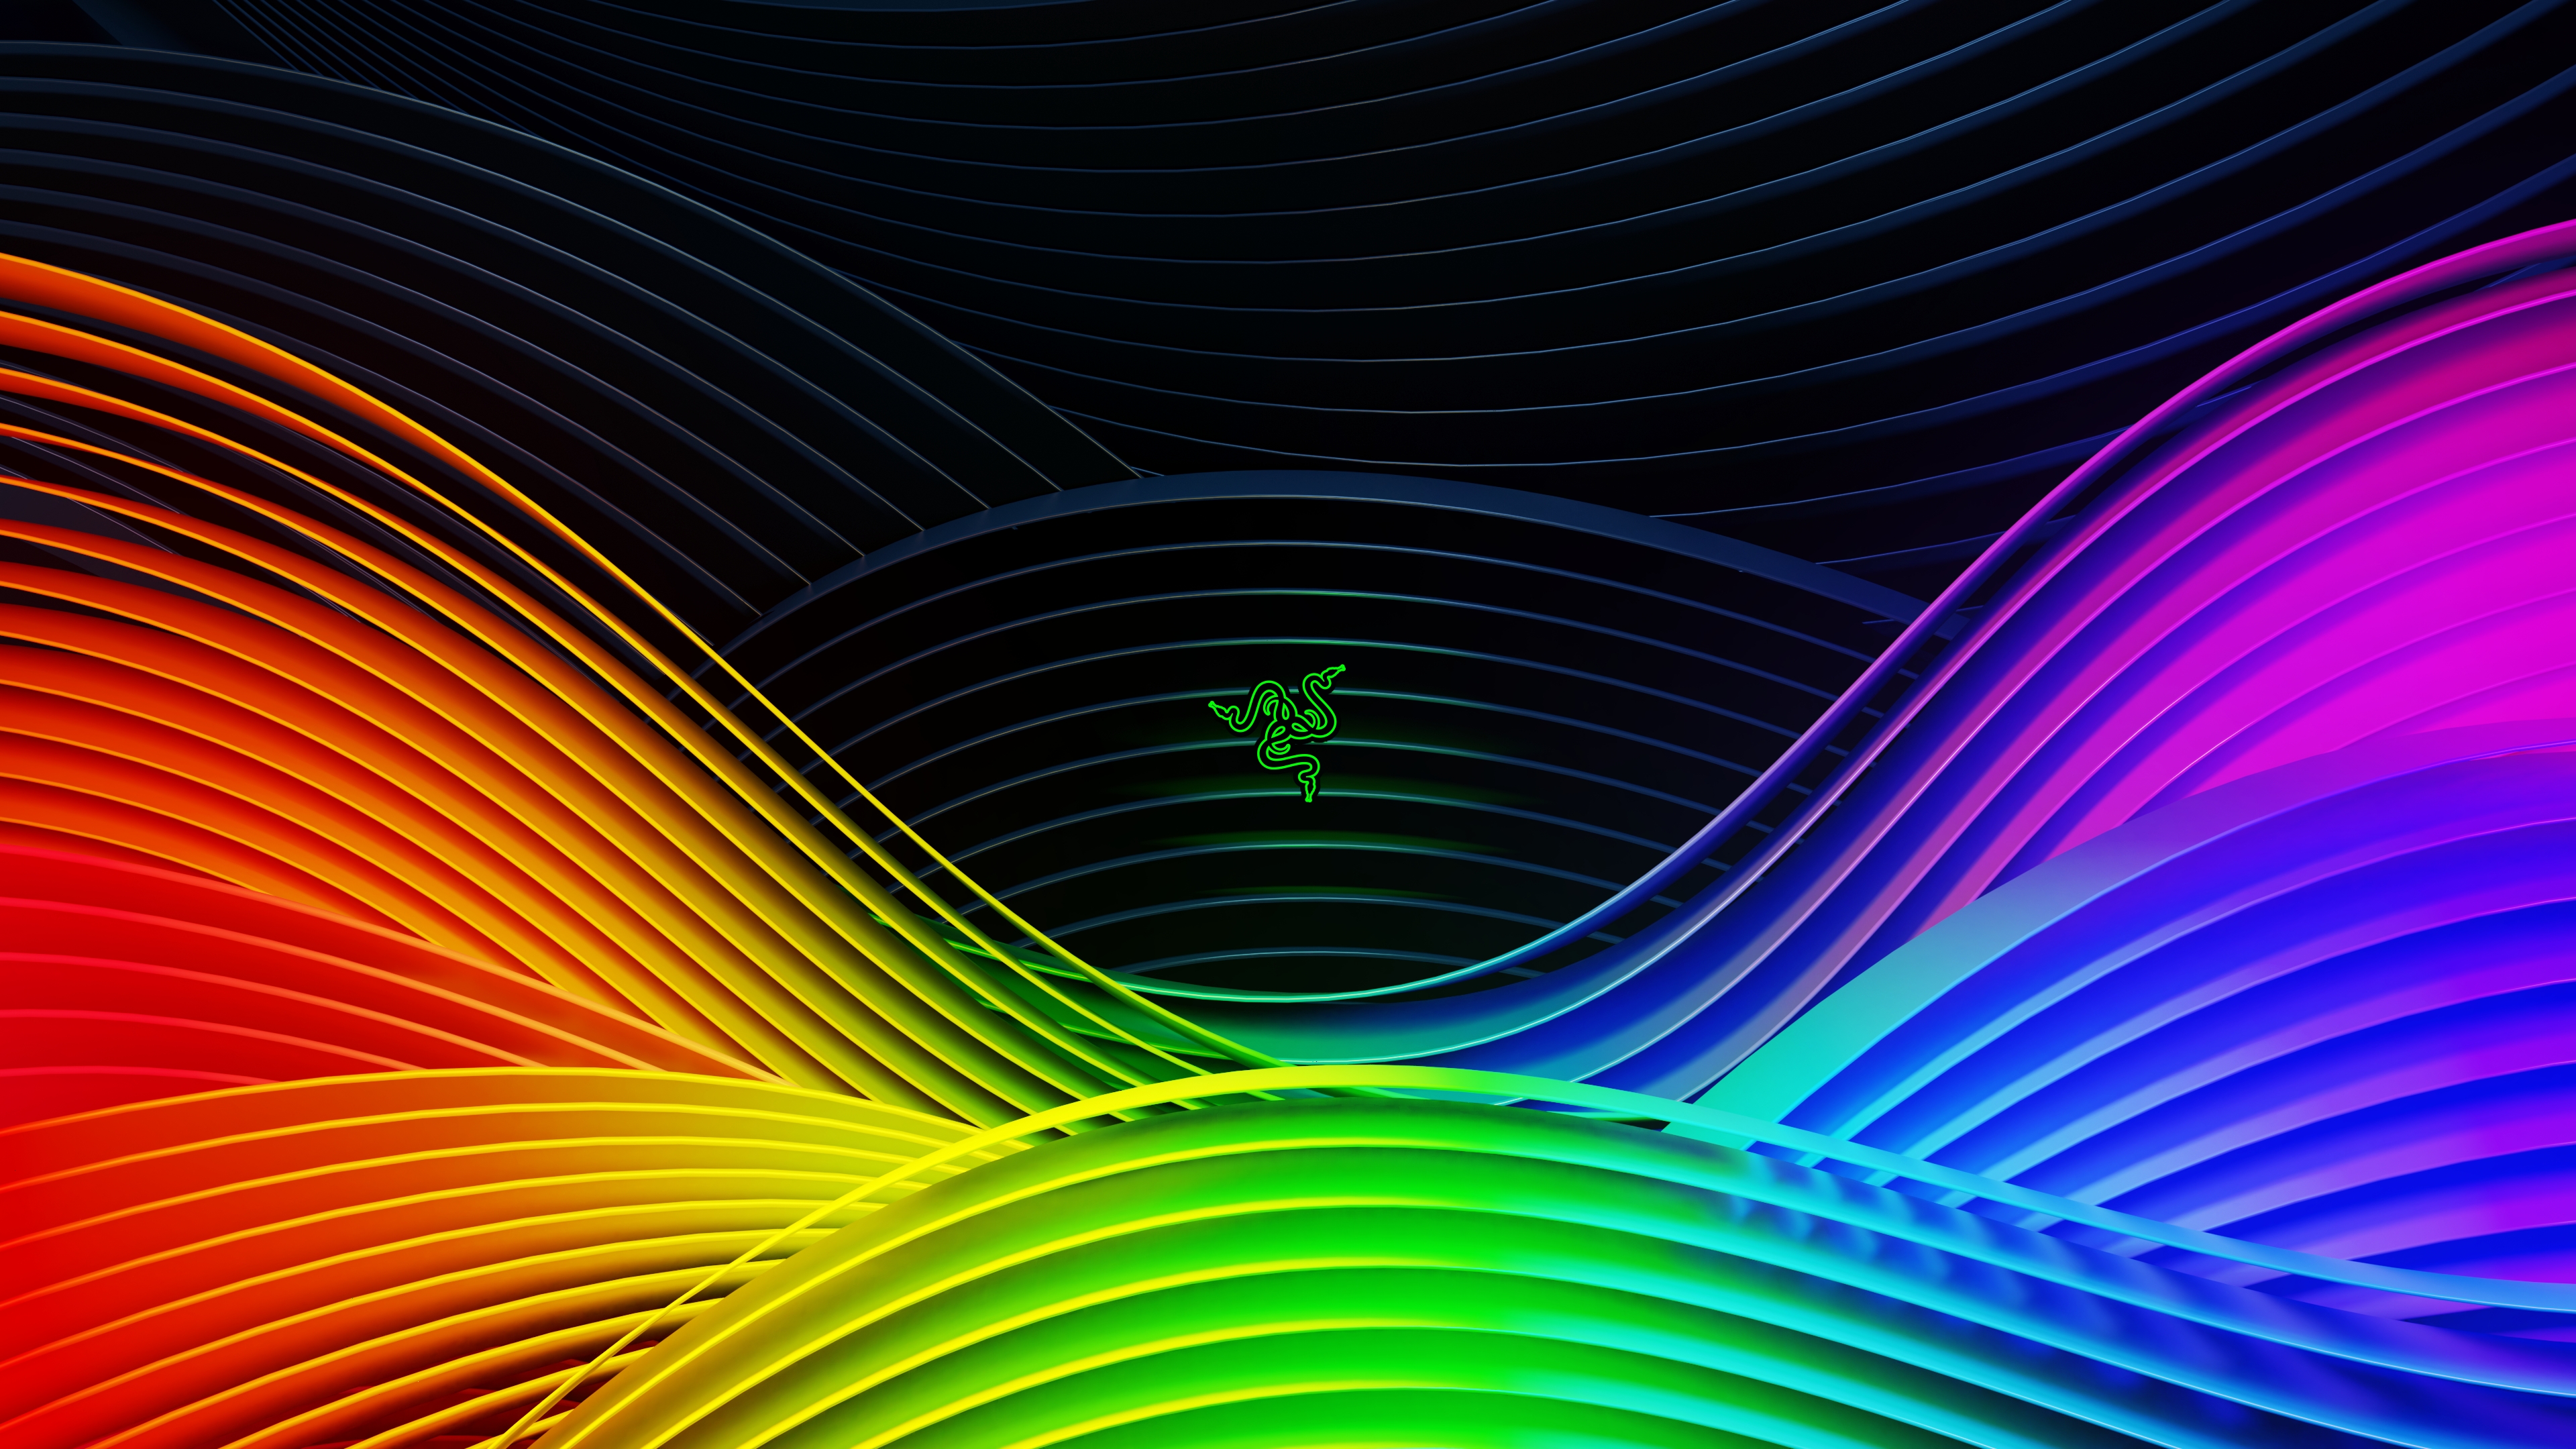 HD wallpaper, Spectrum, Neon, Ridges, Razer, Waves, Colorful